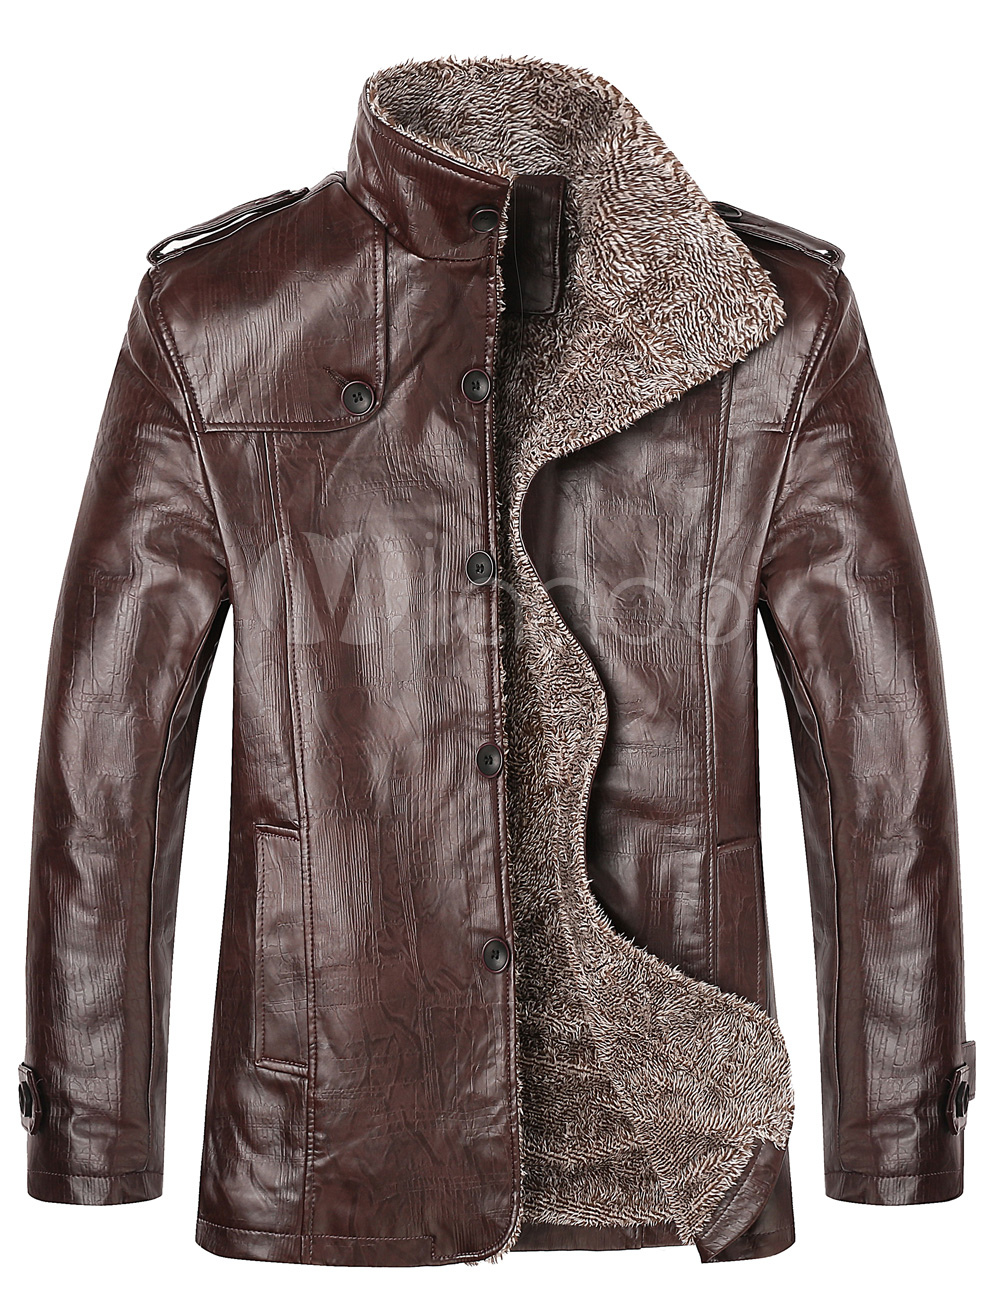 Long Vintage Leather Jacket - Milanoo.com